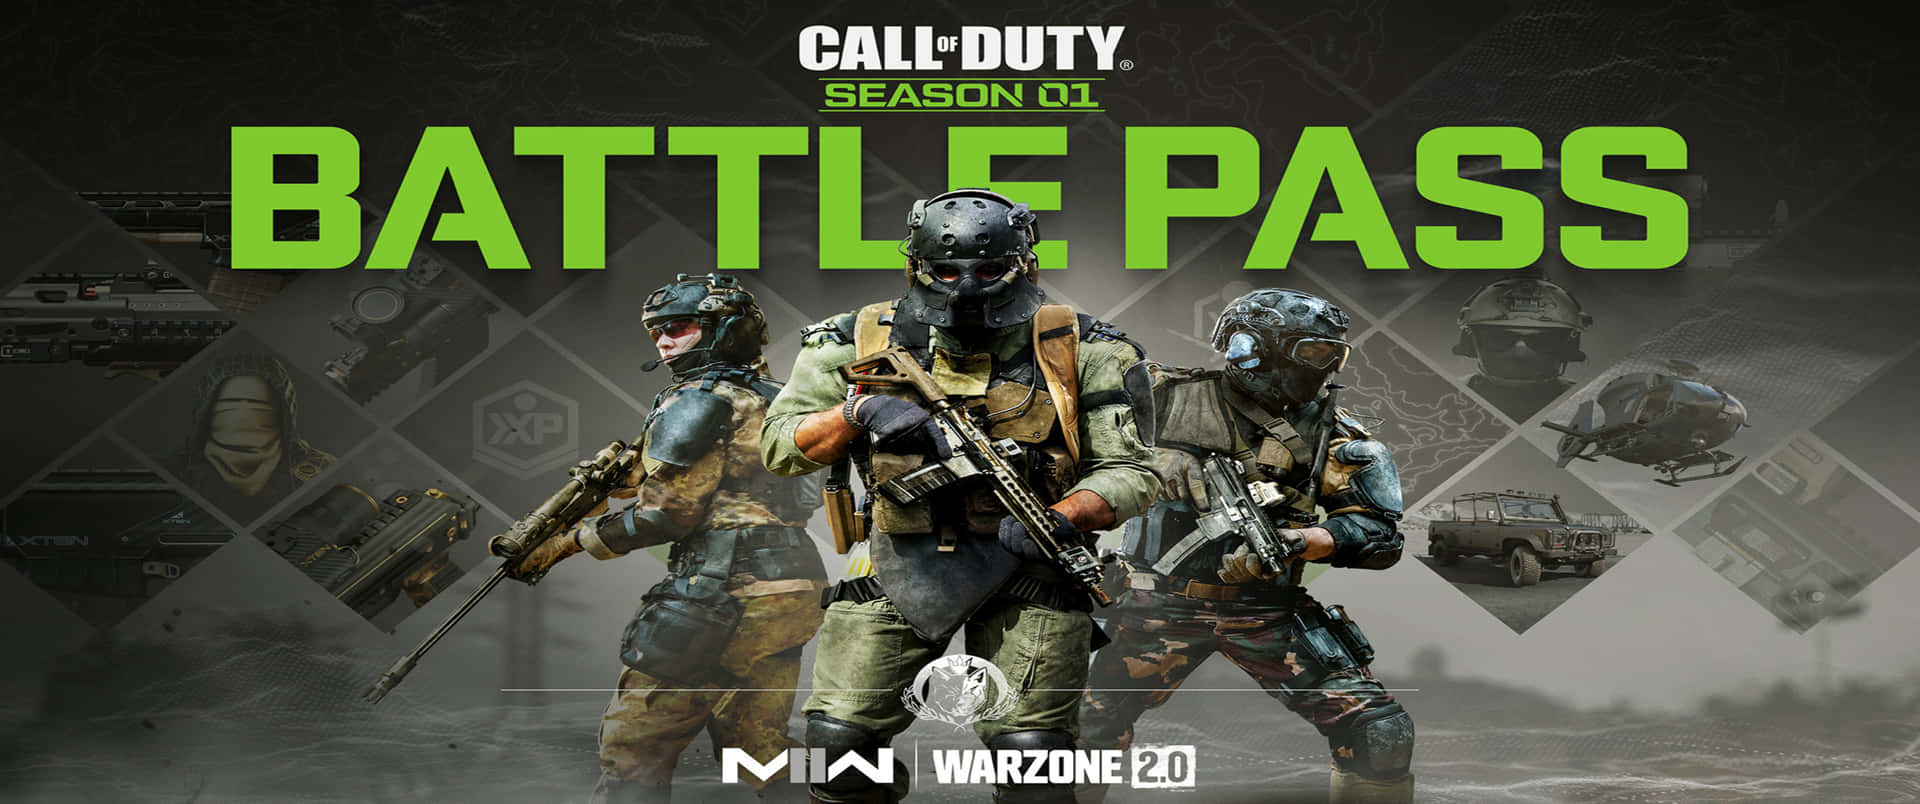 Pasede Batalla De La Temporada 01 3440x1440p Fondo De Pantalla De Call Of Duty Modern Warfare